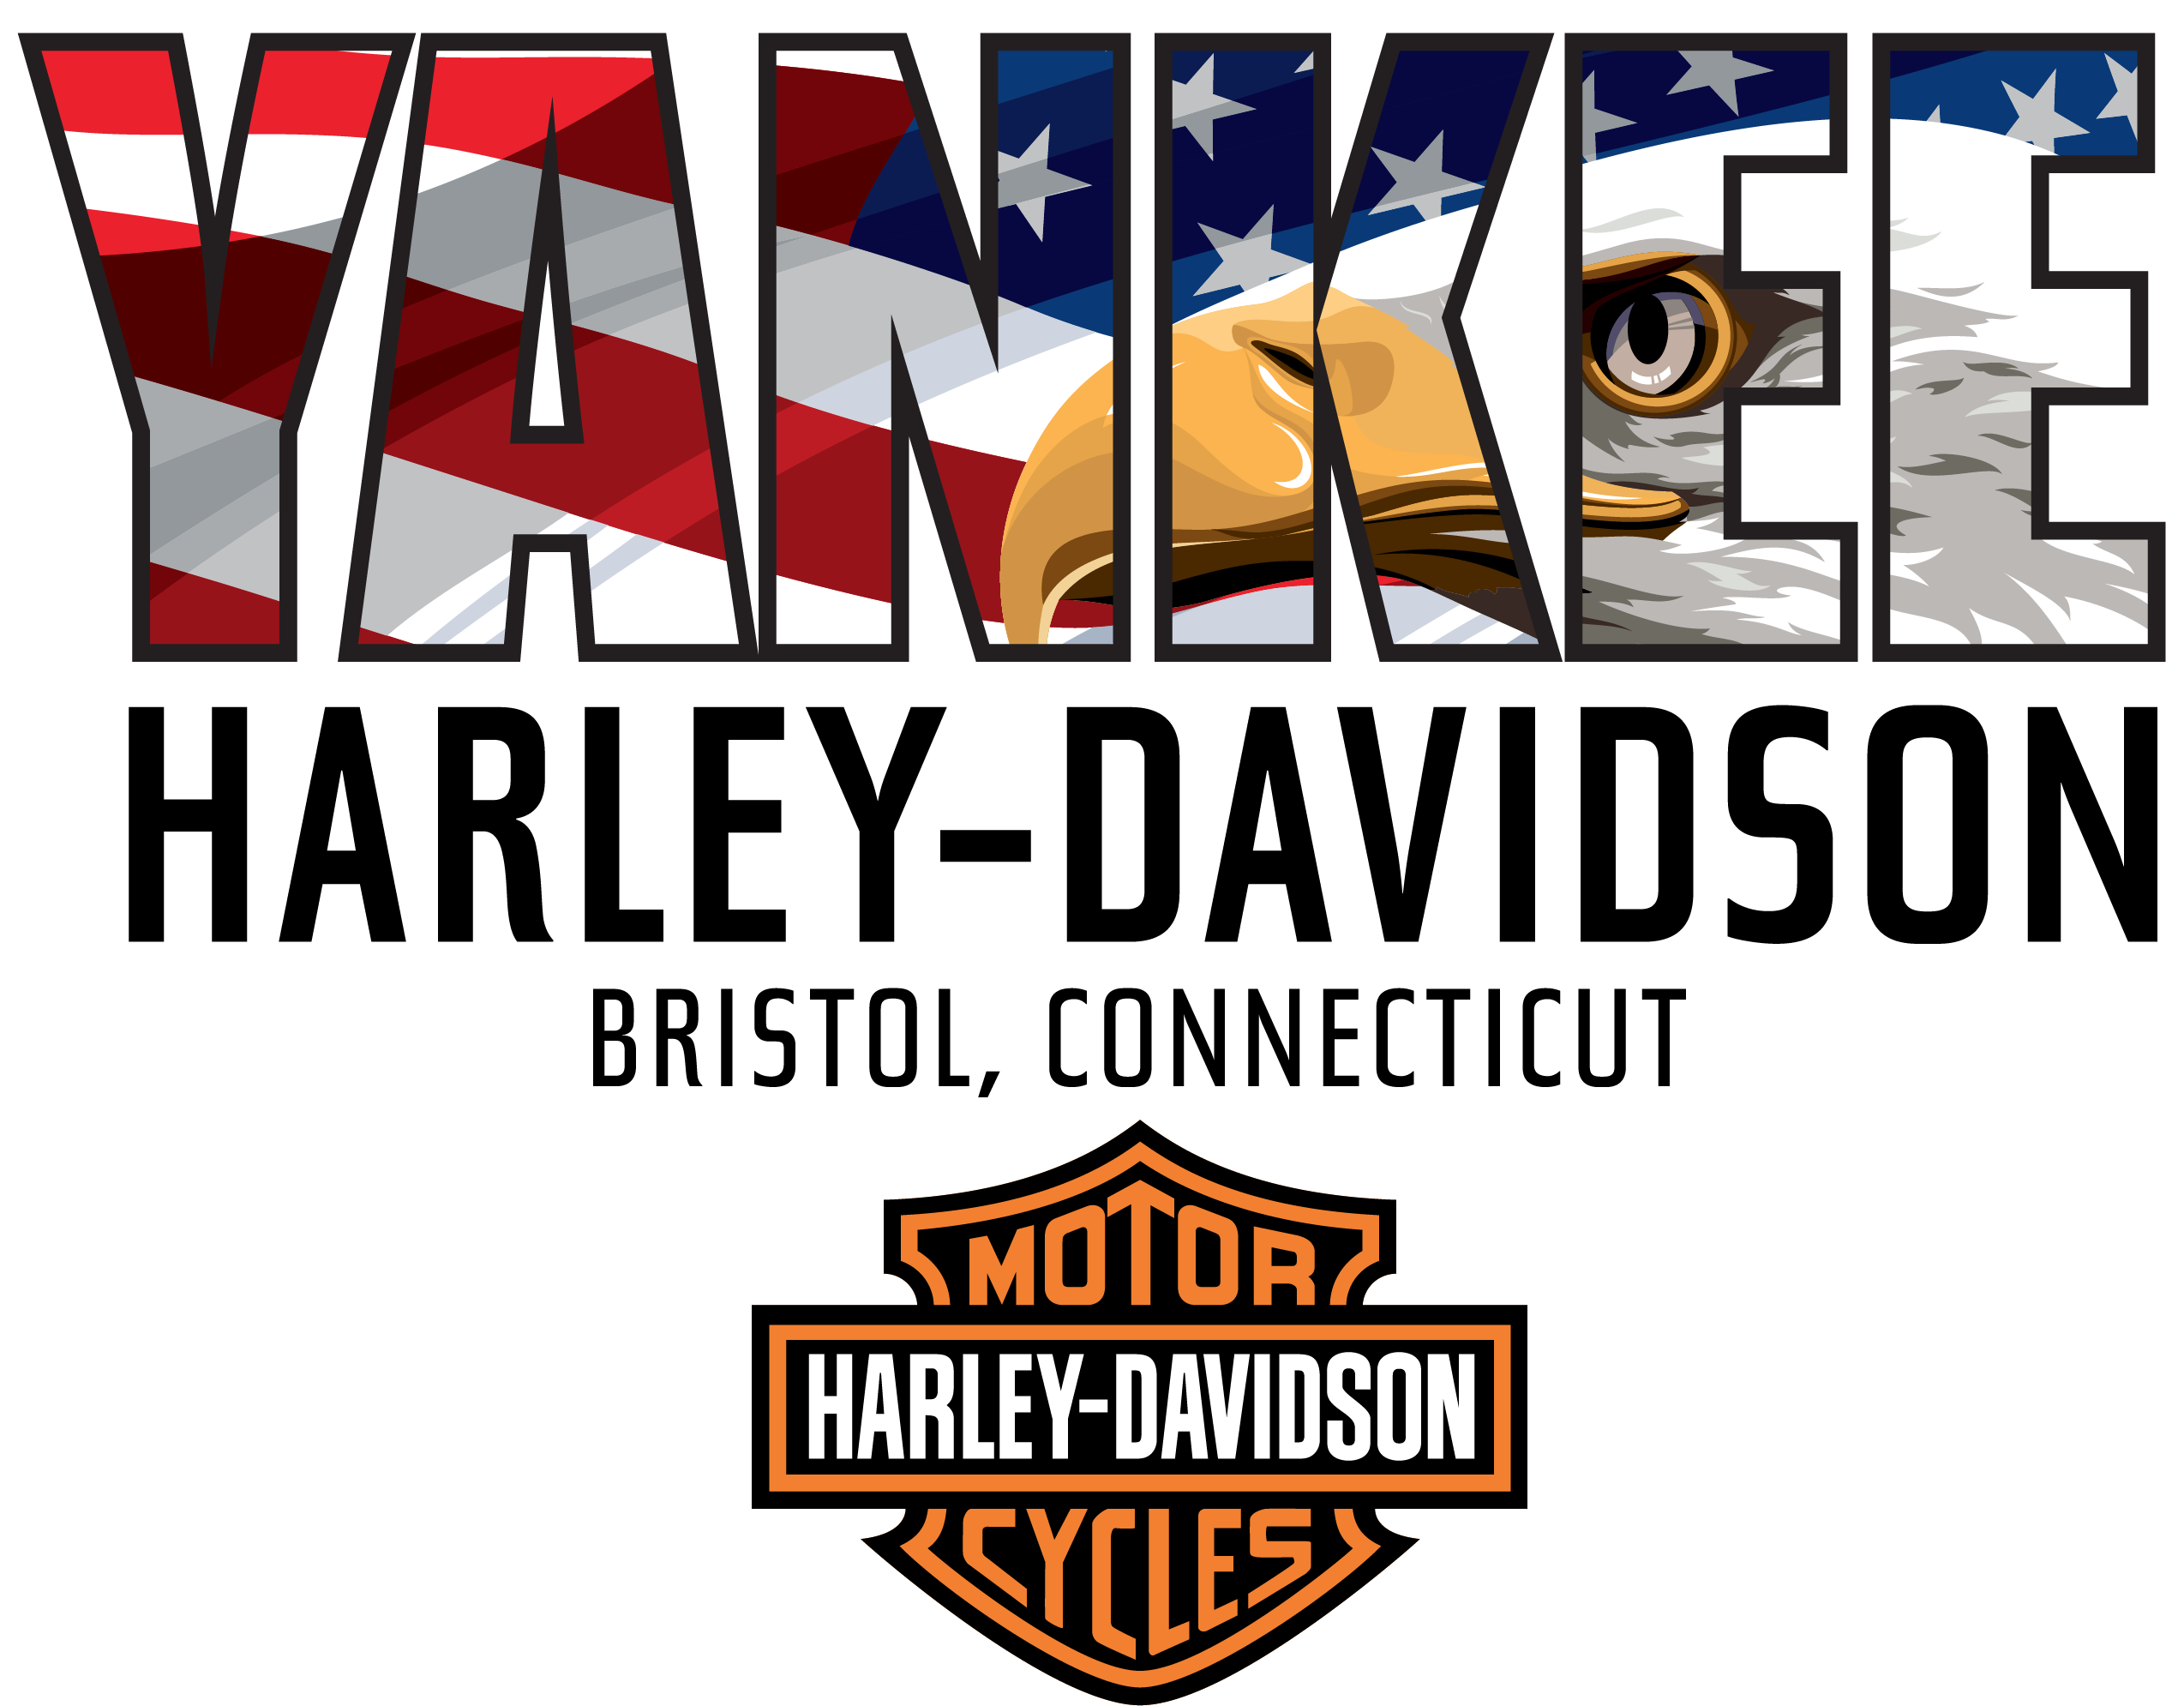 Sponsored by Yankee Harley Davidson